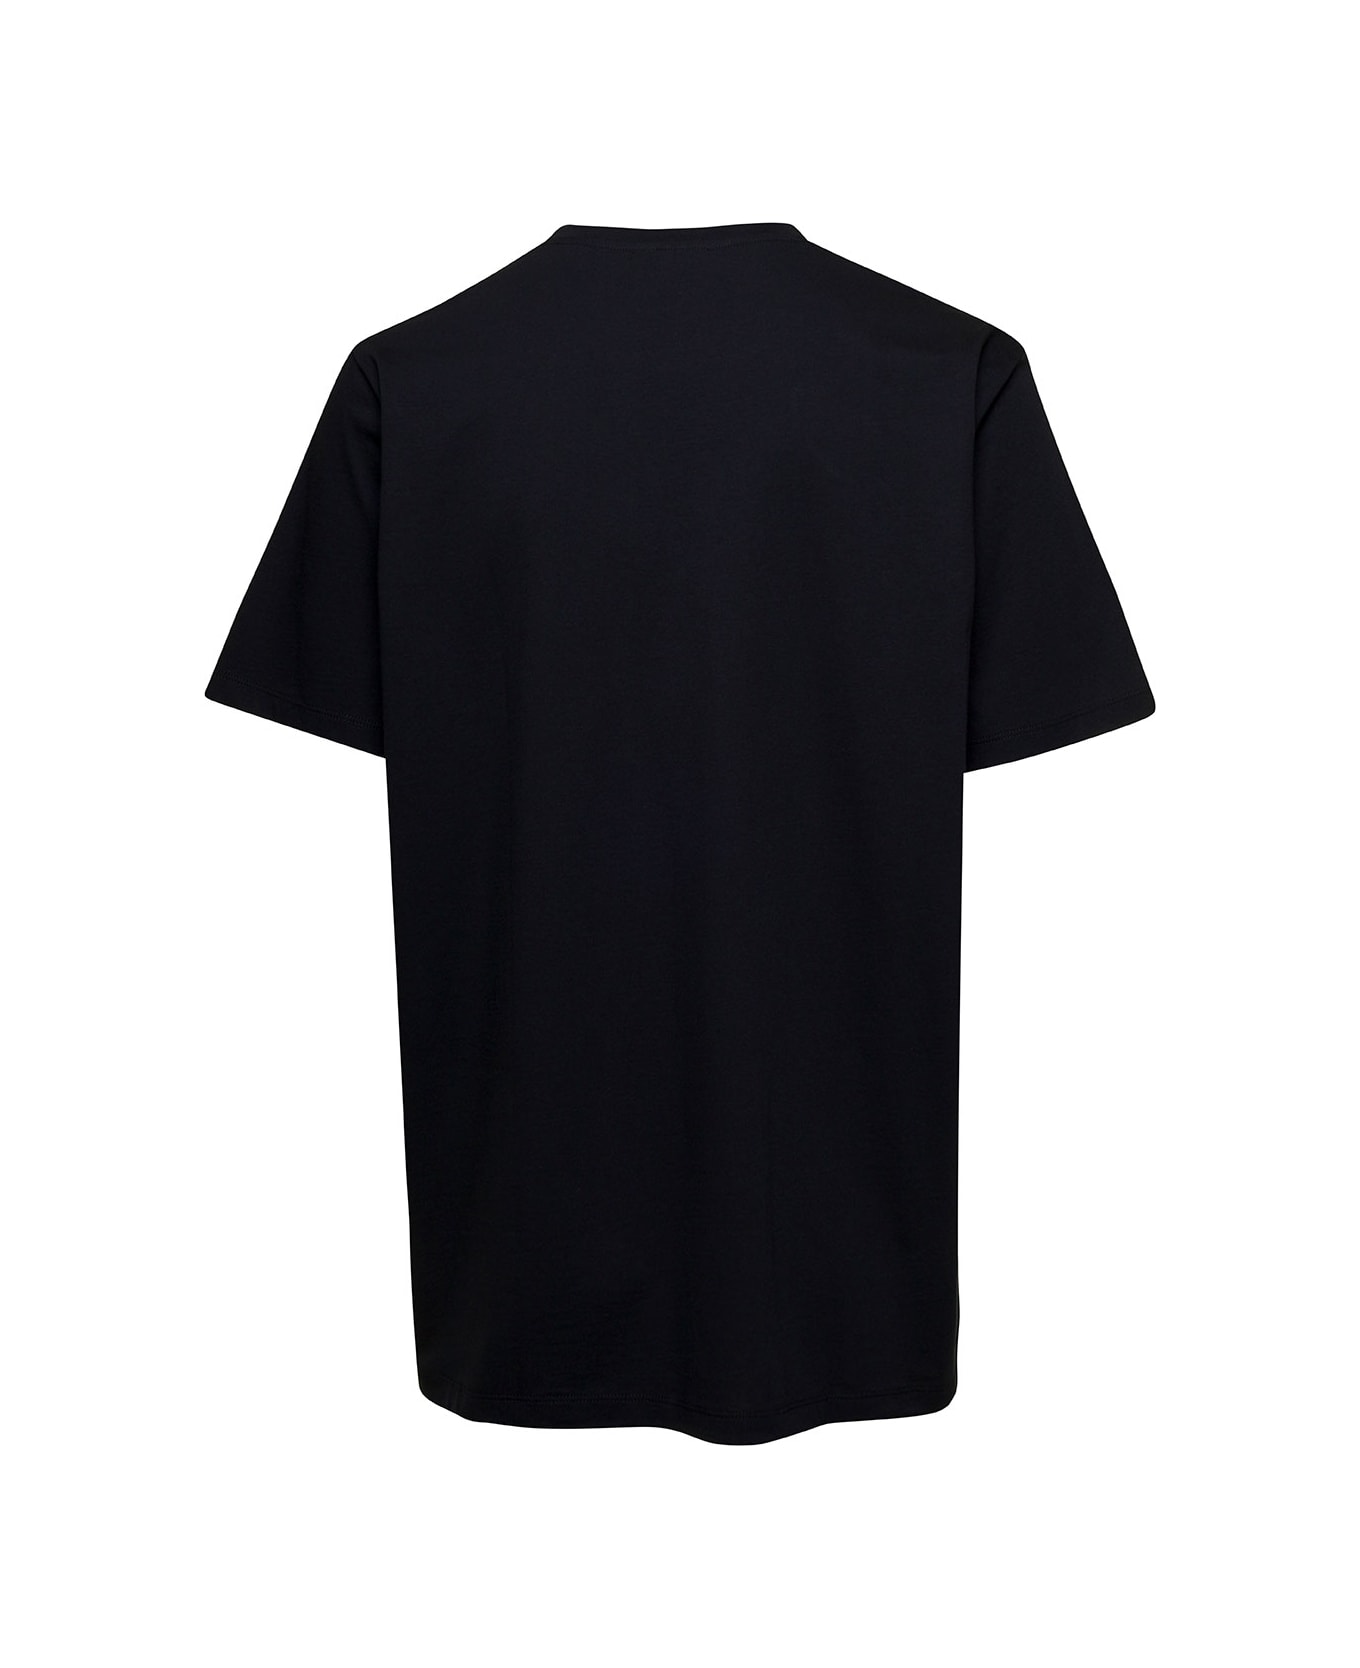 Balmain Flock & Foil T-shirt - Bulky Fit - Black